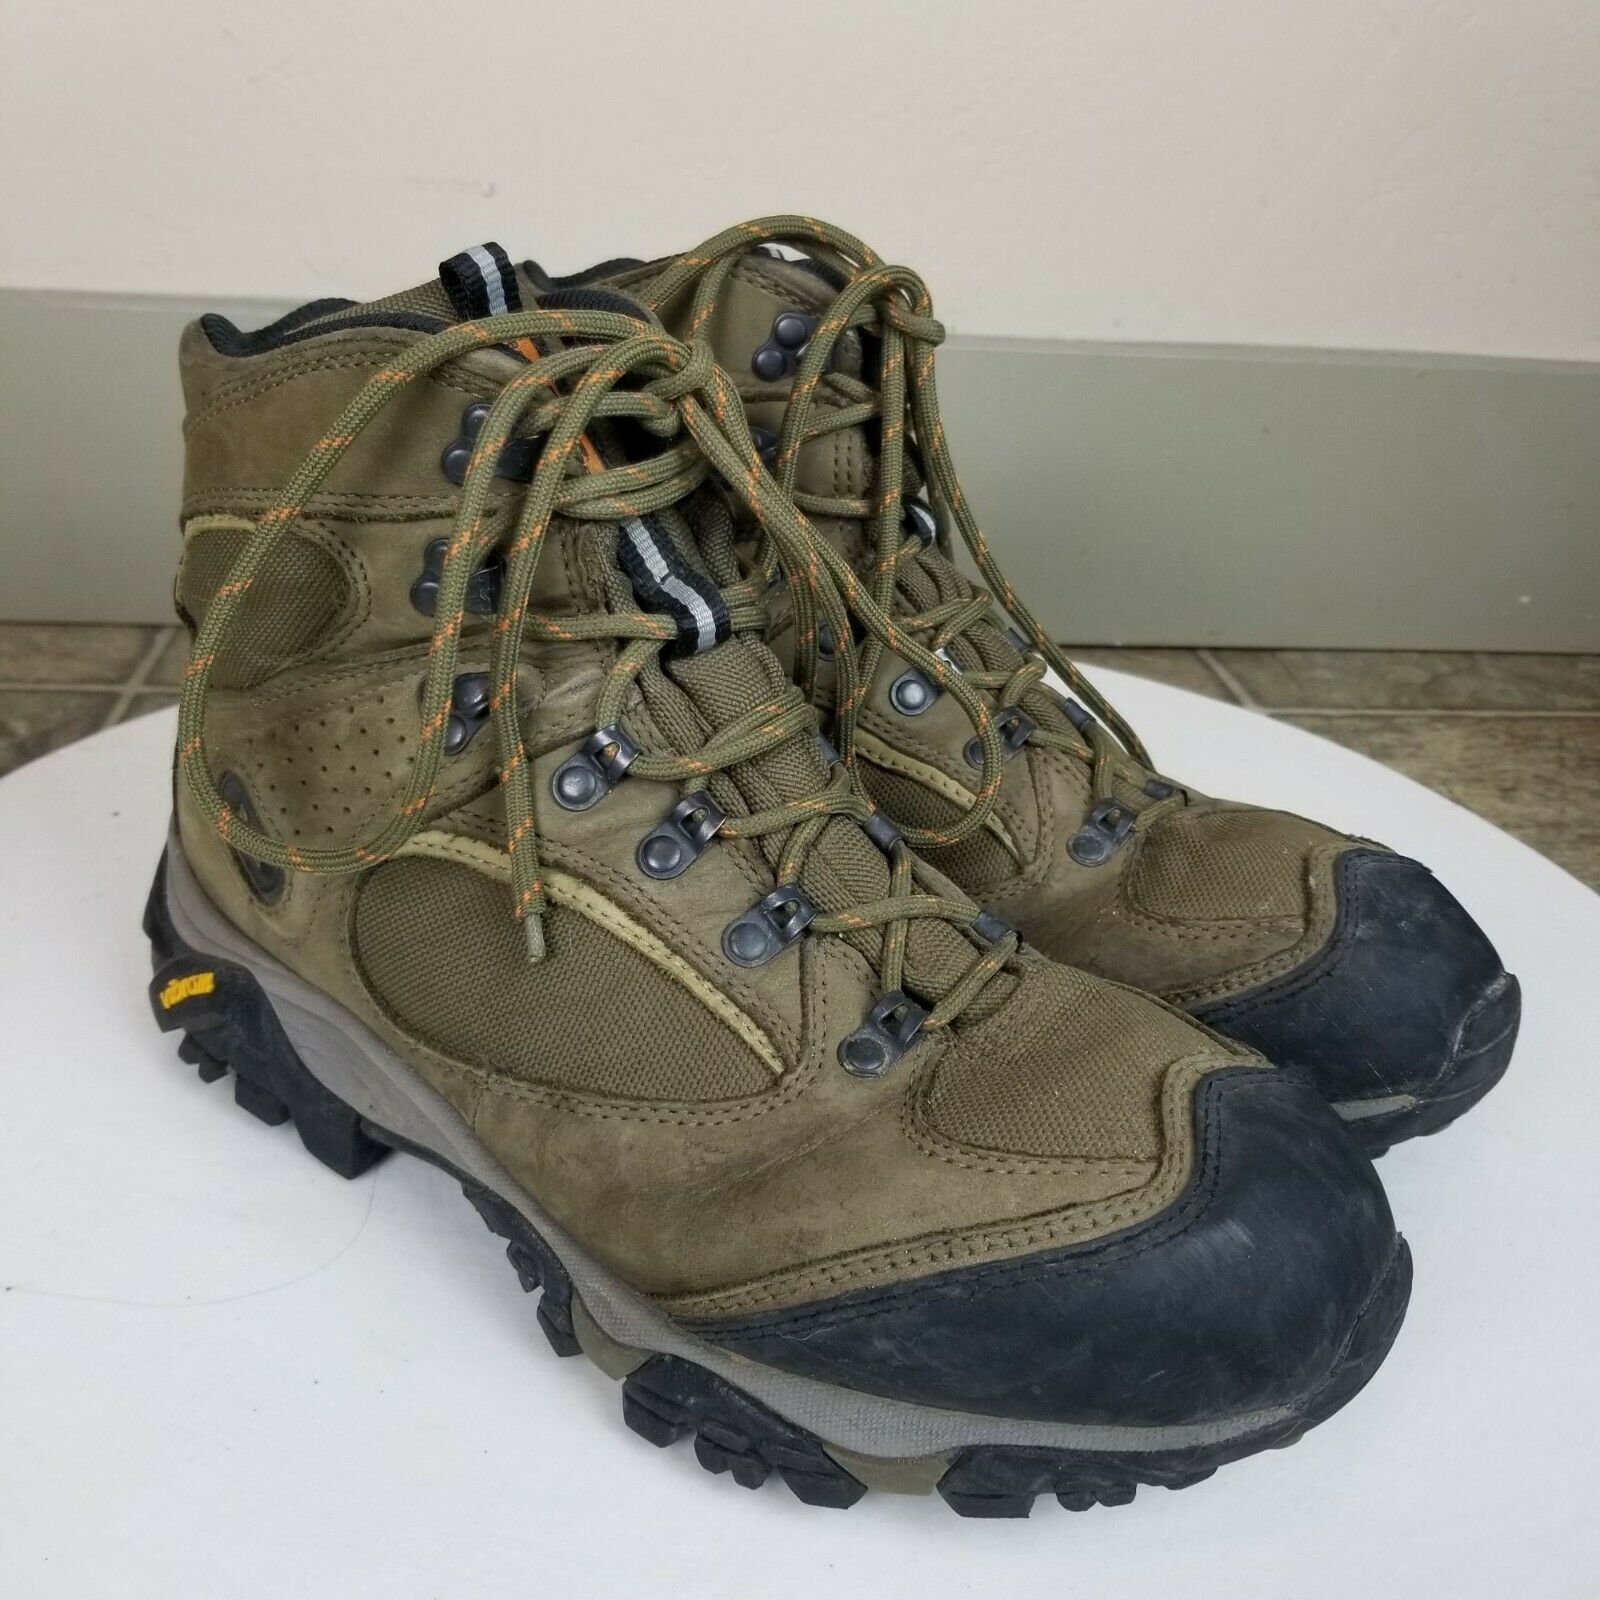 REI Monarch IV 4 Men's Sz 9 Hiking Boots Leather Walking Waterproof Ankle Brown